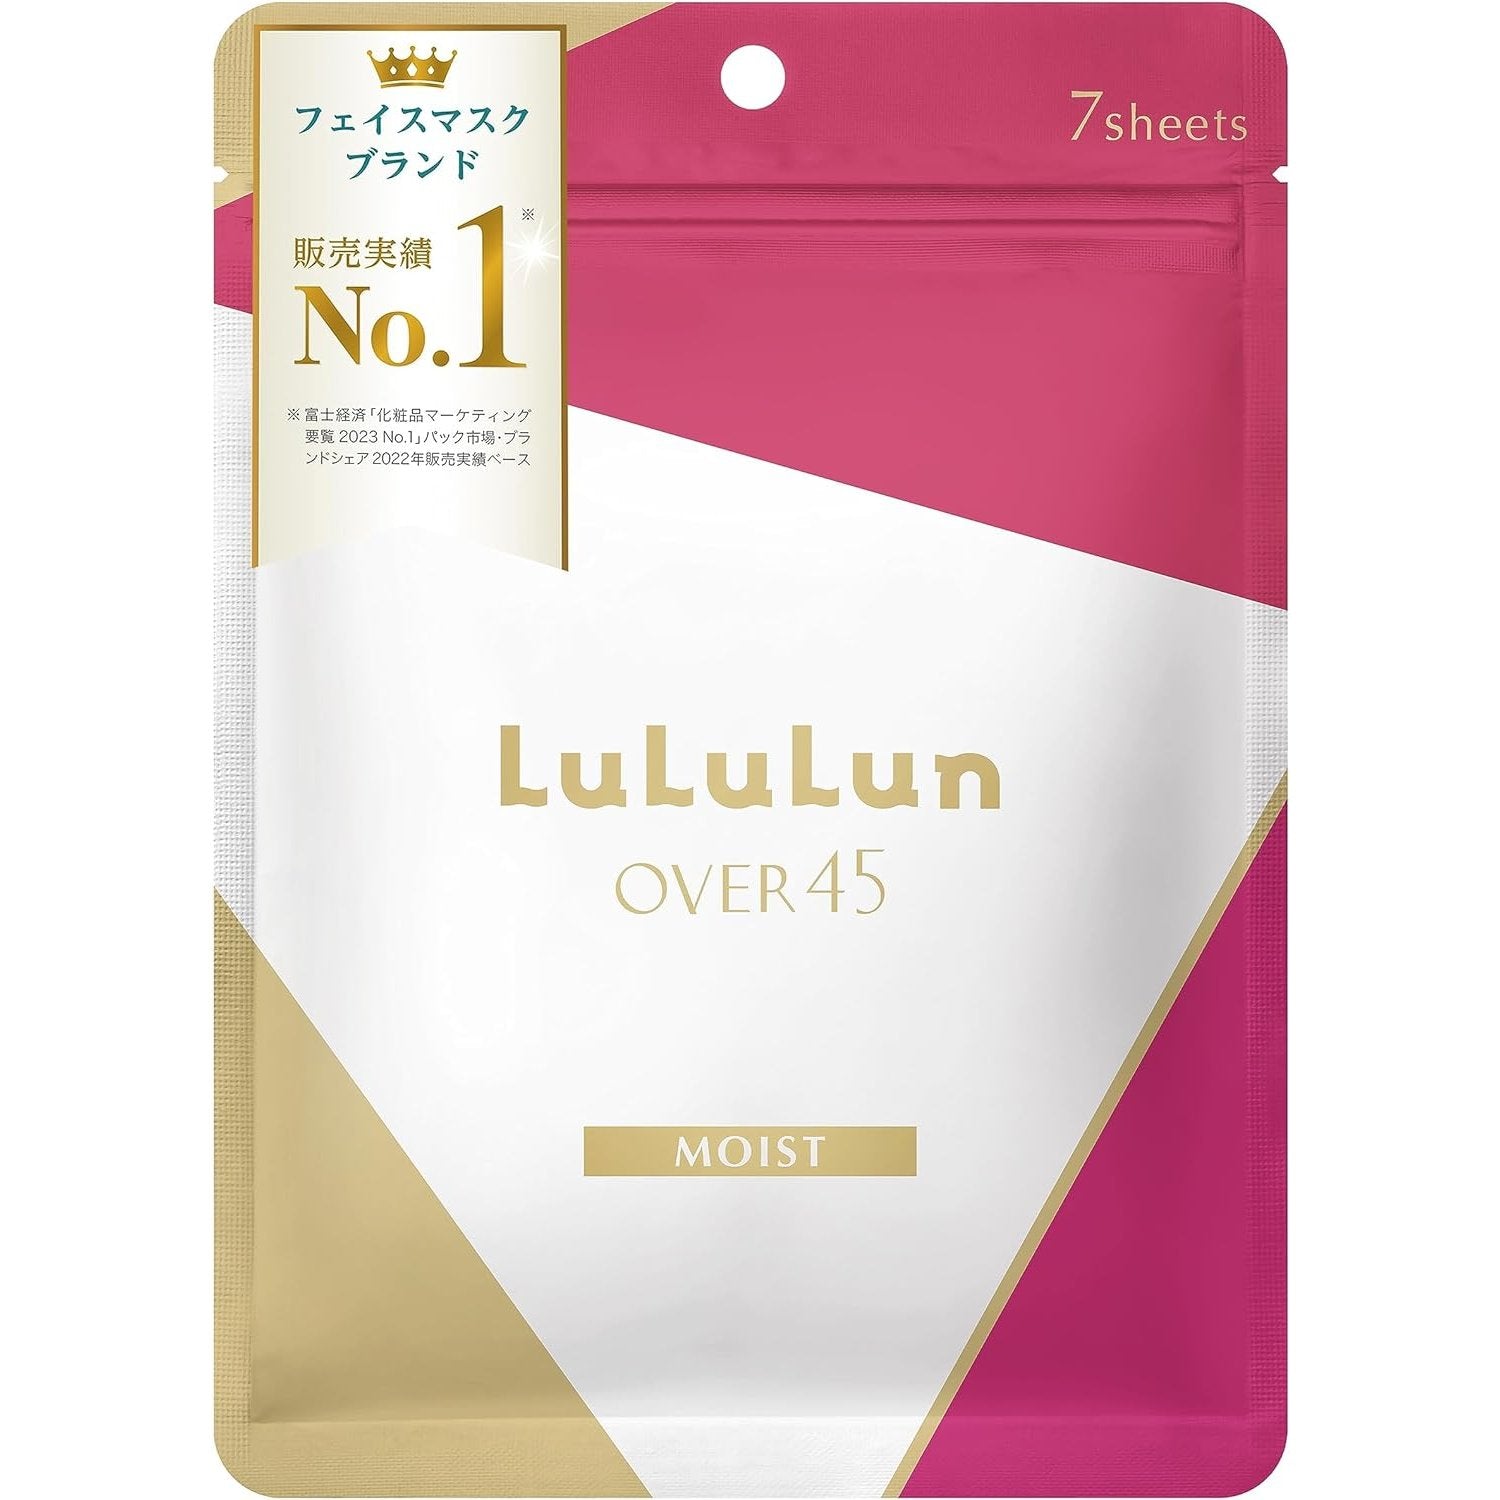 Lululun Over 45 Anti-Wrinkle Moist Face Mask 7 Sheets